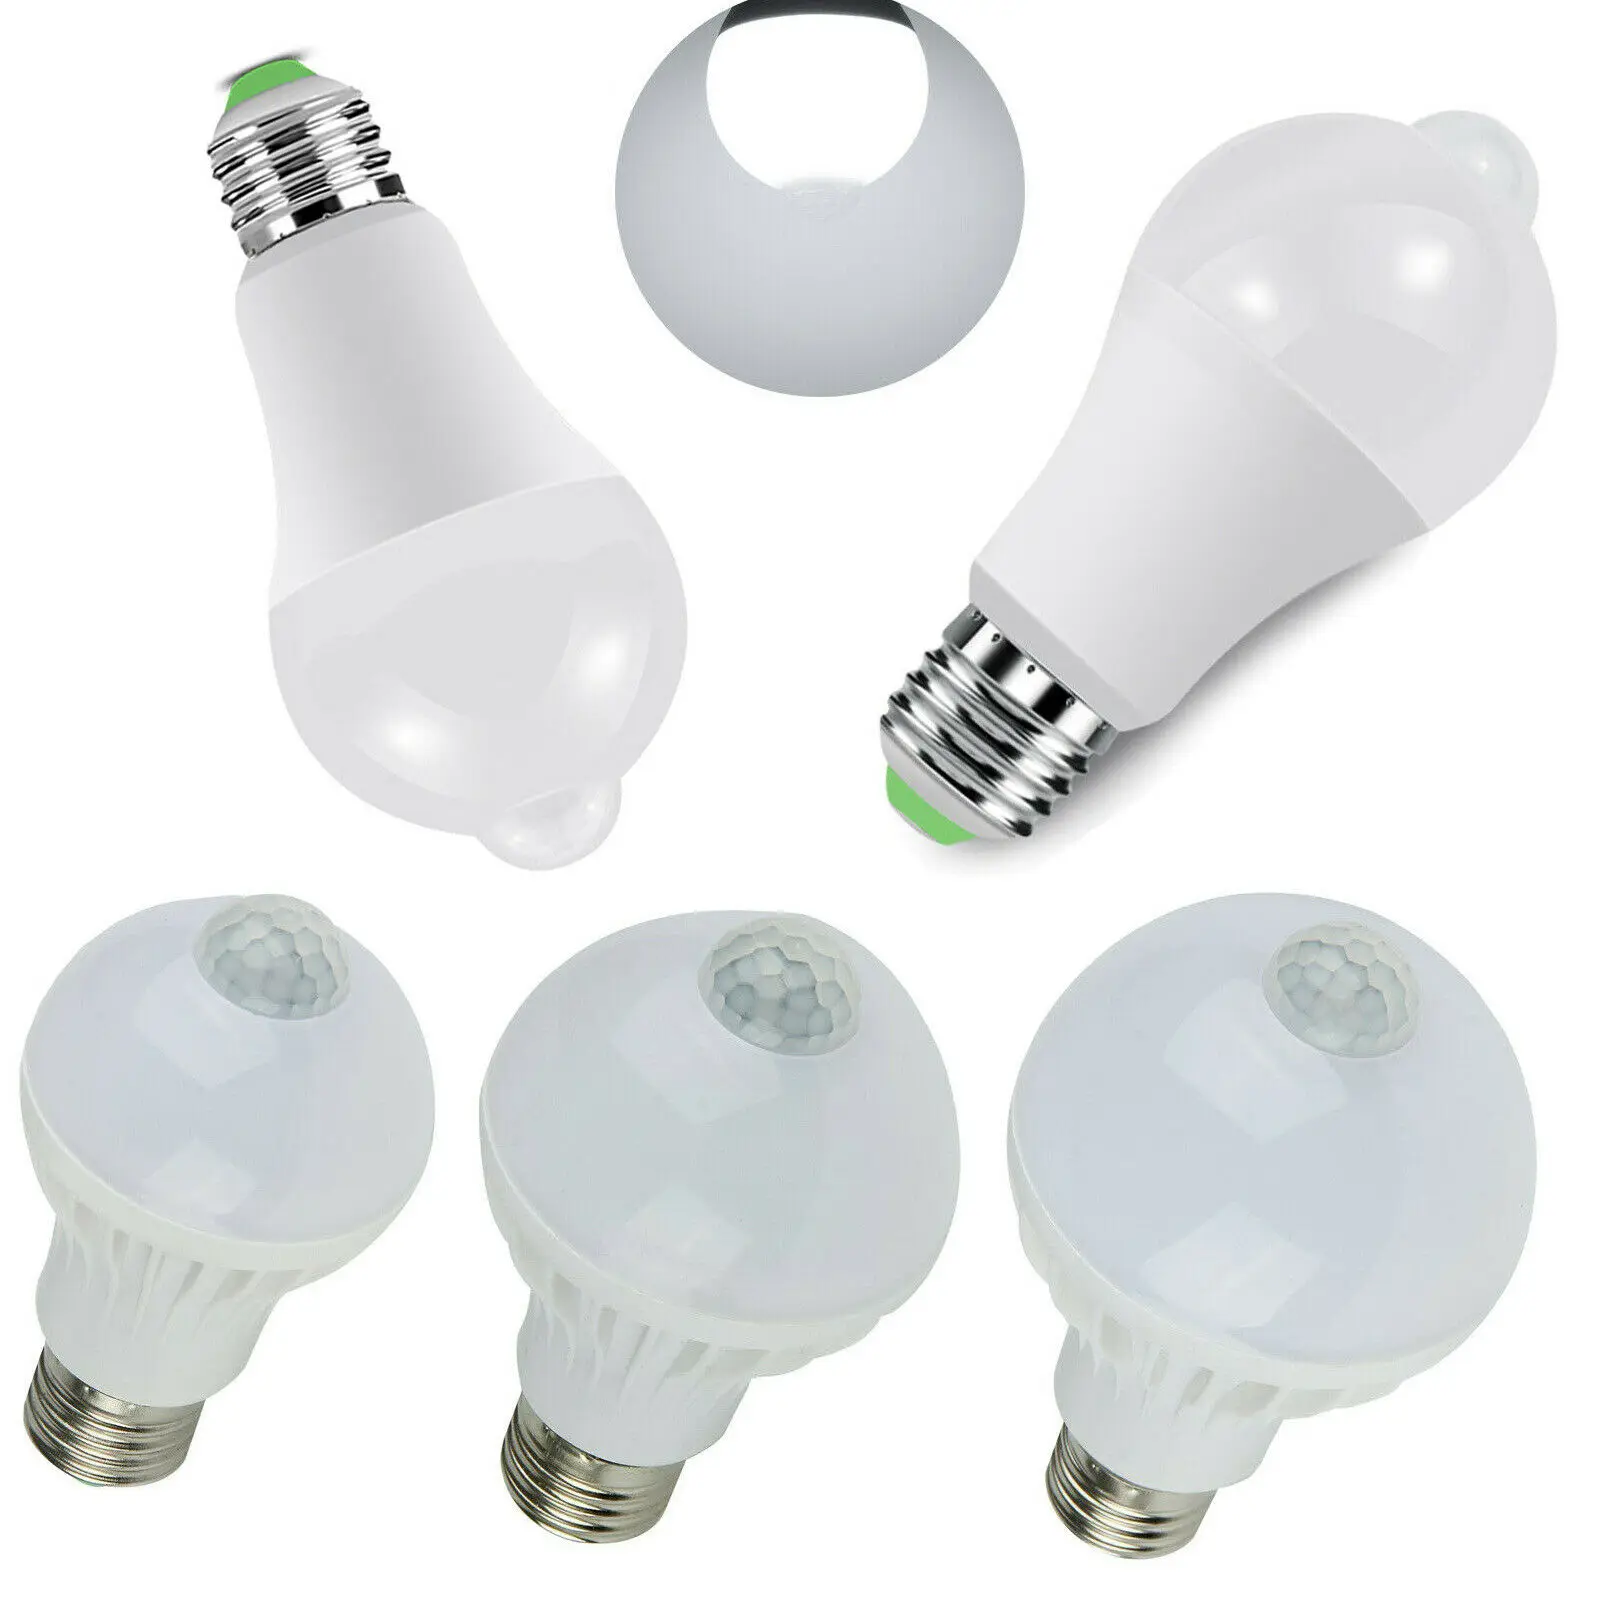 

5W 7W 9W 2835 SMD LED PIR Motion Sensor Globe Light Bulb E27 Cool White 6500K Stairs Corridor Night Security Lamp